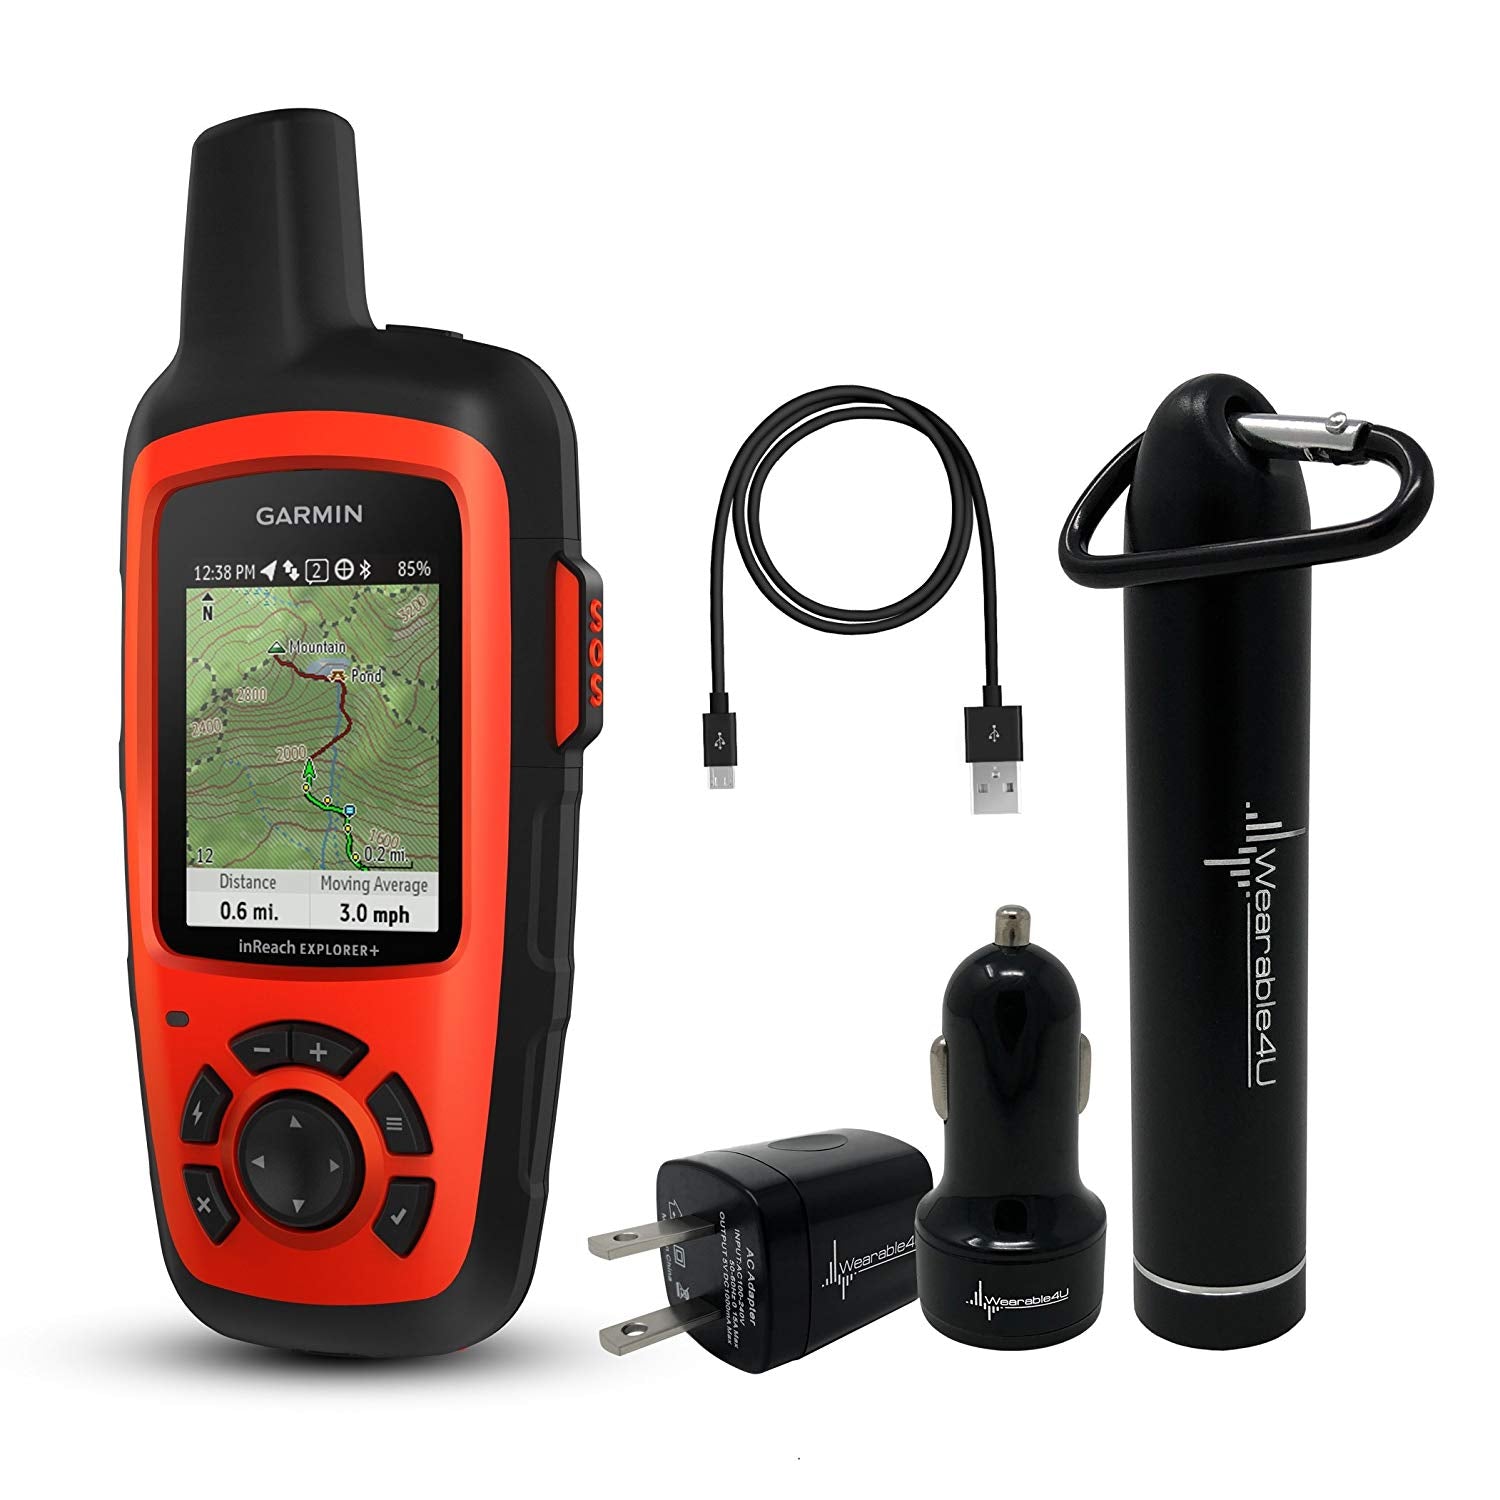 Gadgets Garmin Communicator Handheld GPS – Sports InReach Satellite and with Explorer+ Navi